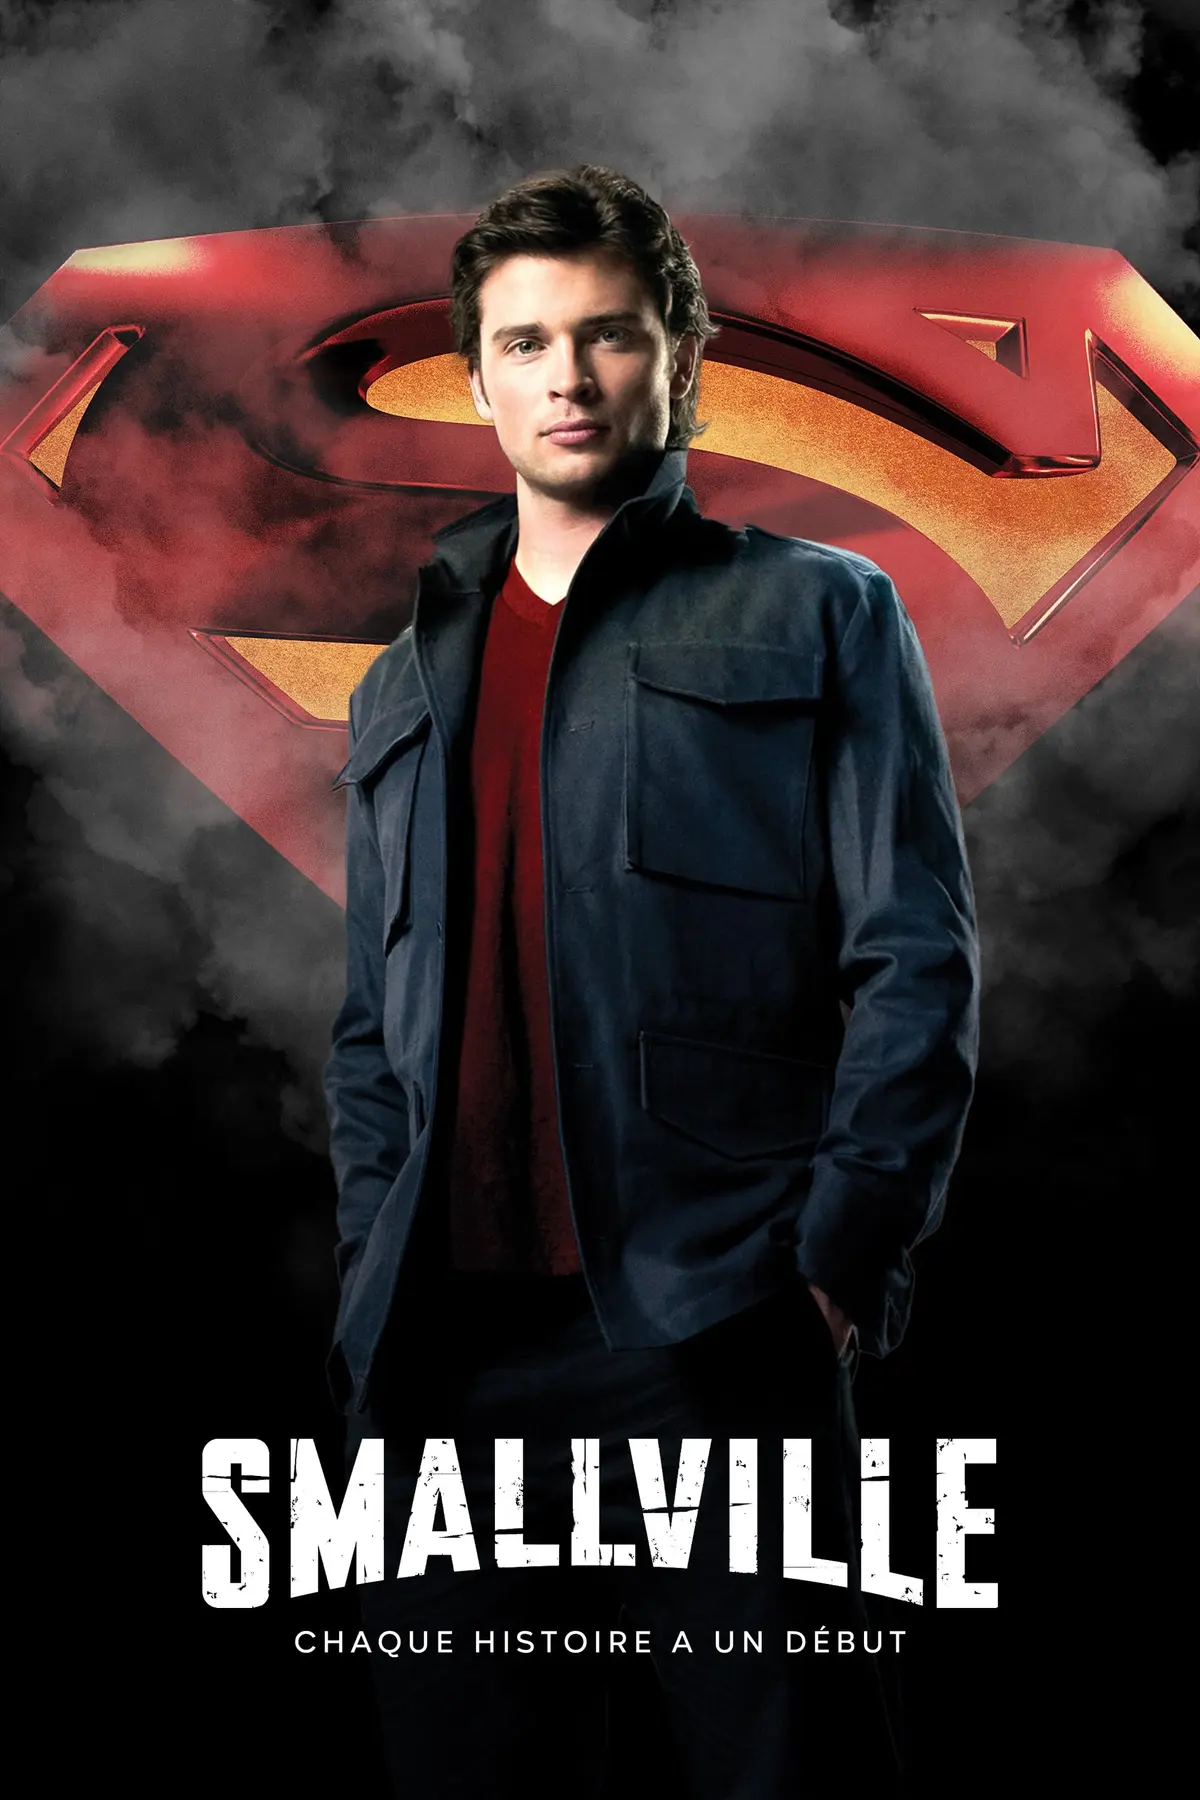 Smallville S07E08 L'anneau de la victoire